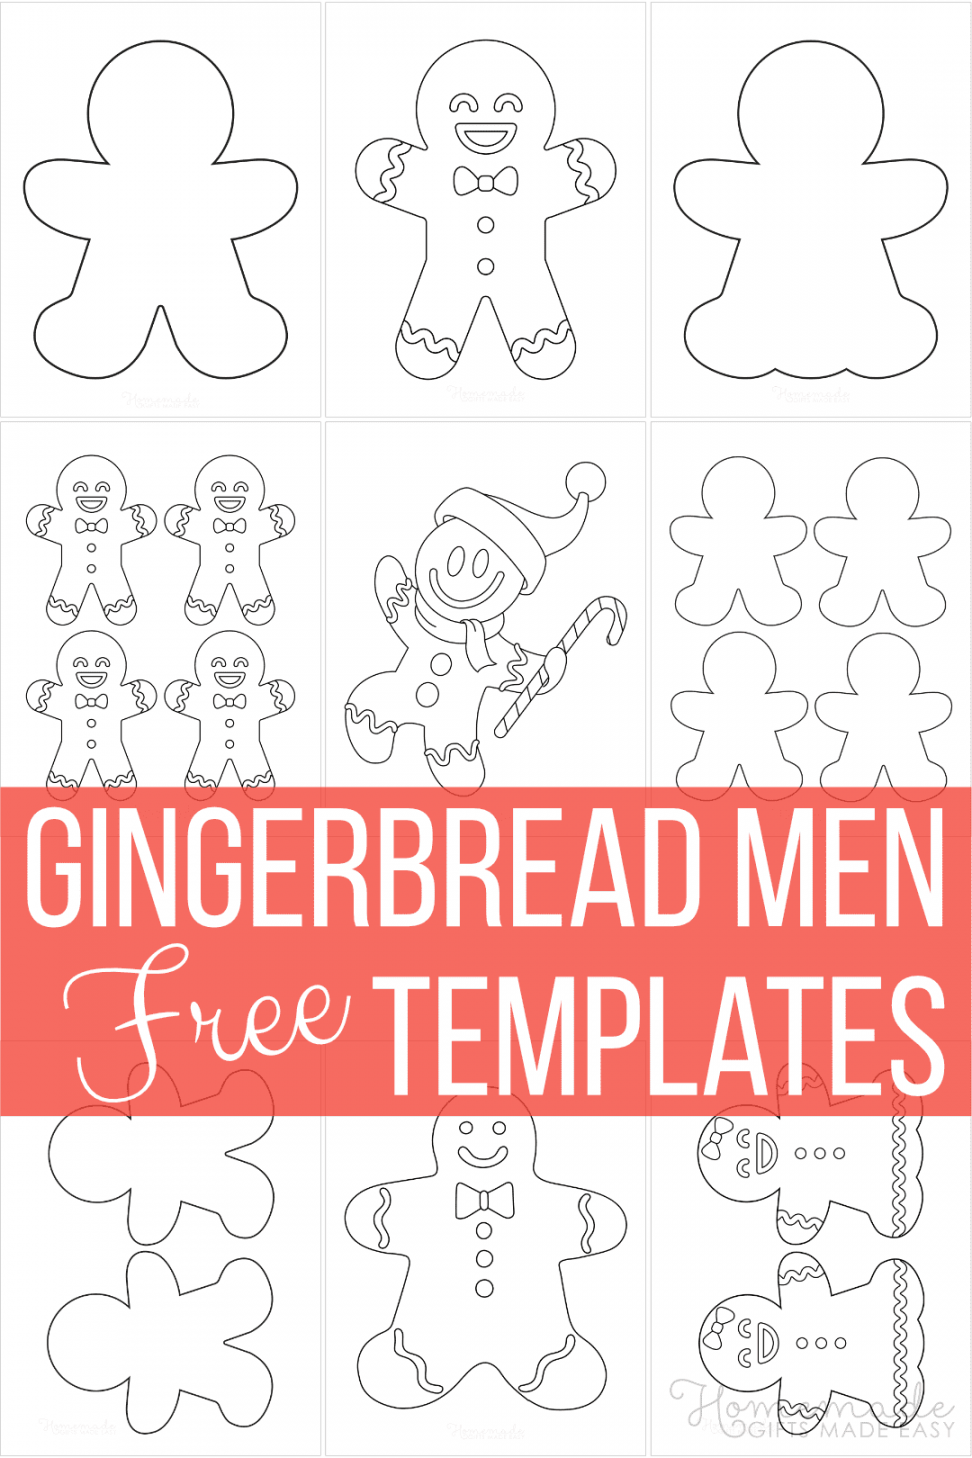 Free Printable Gingerbread Man Templates & Coloring Pages - FREE Printables - Free Gingerbread Man Template